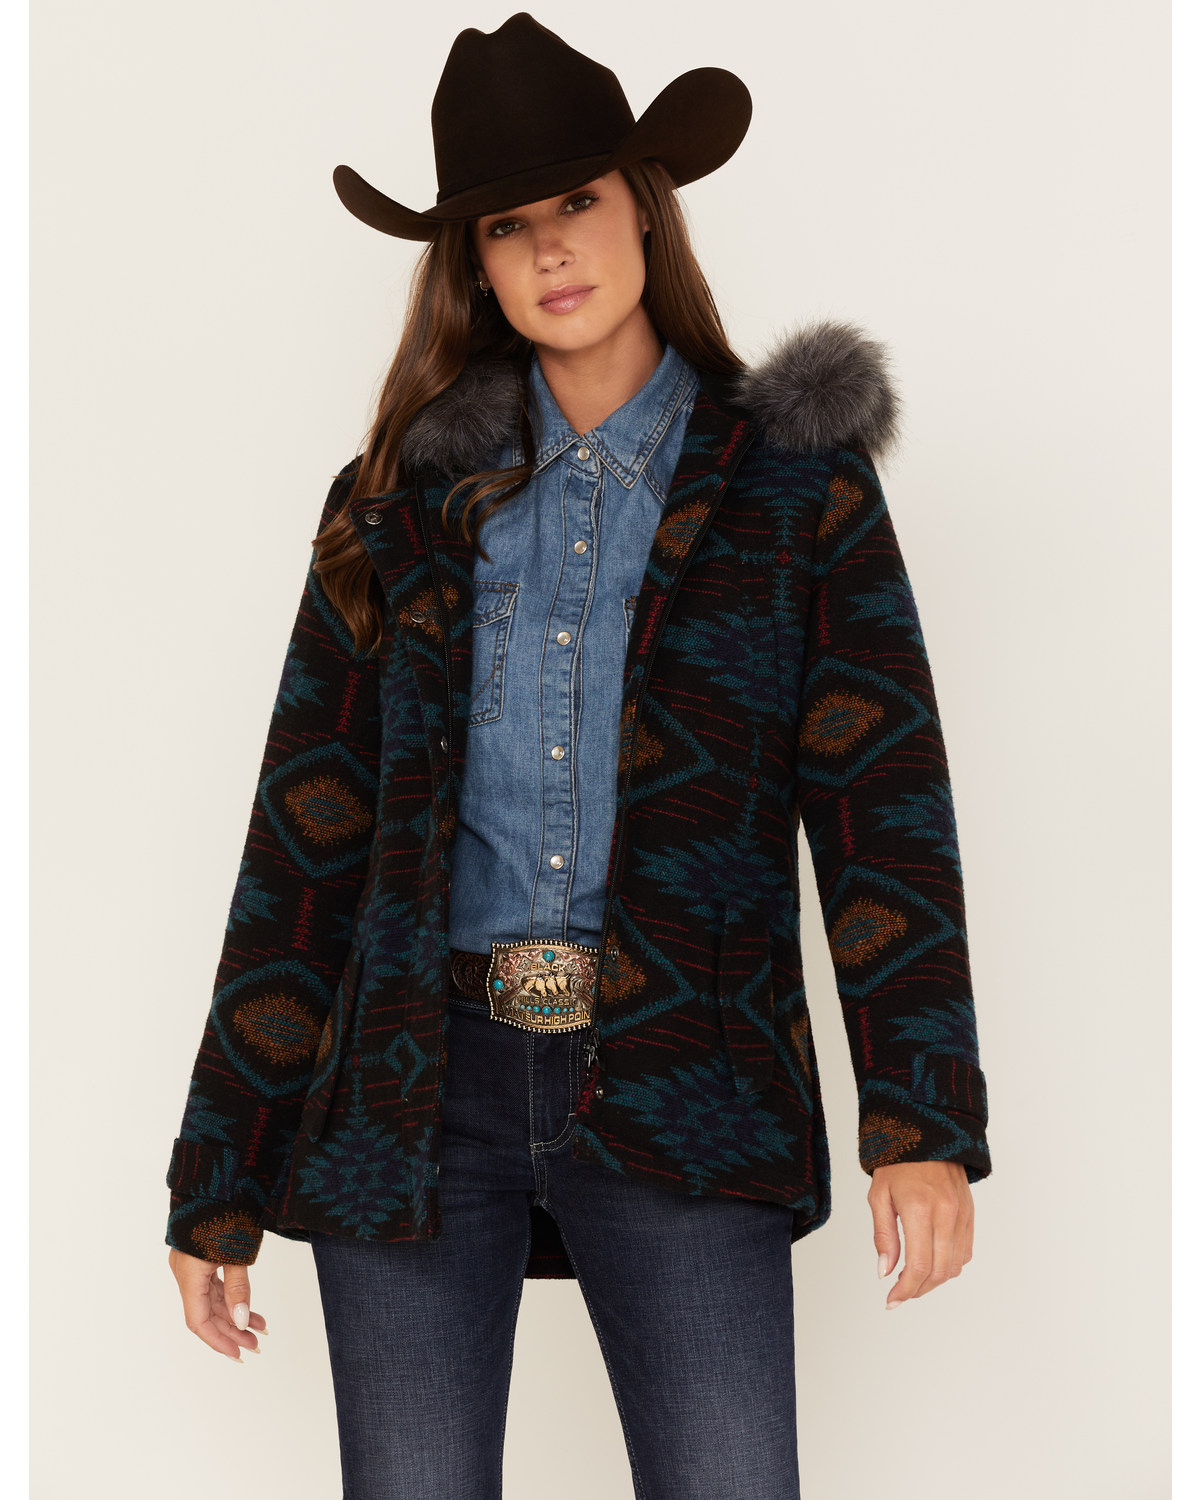 Outback Trading Co. Women's Southwestern Print Faux Fur Myra Coat